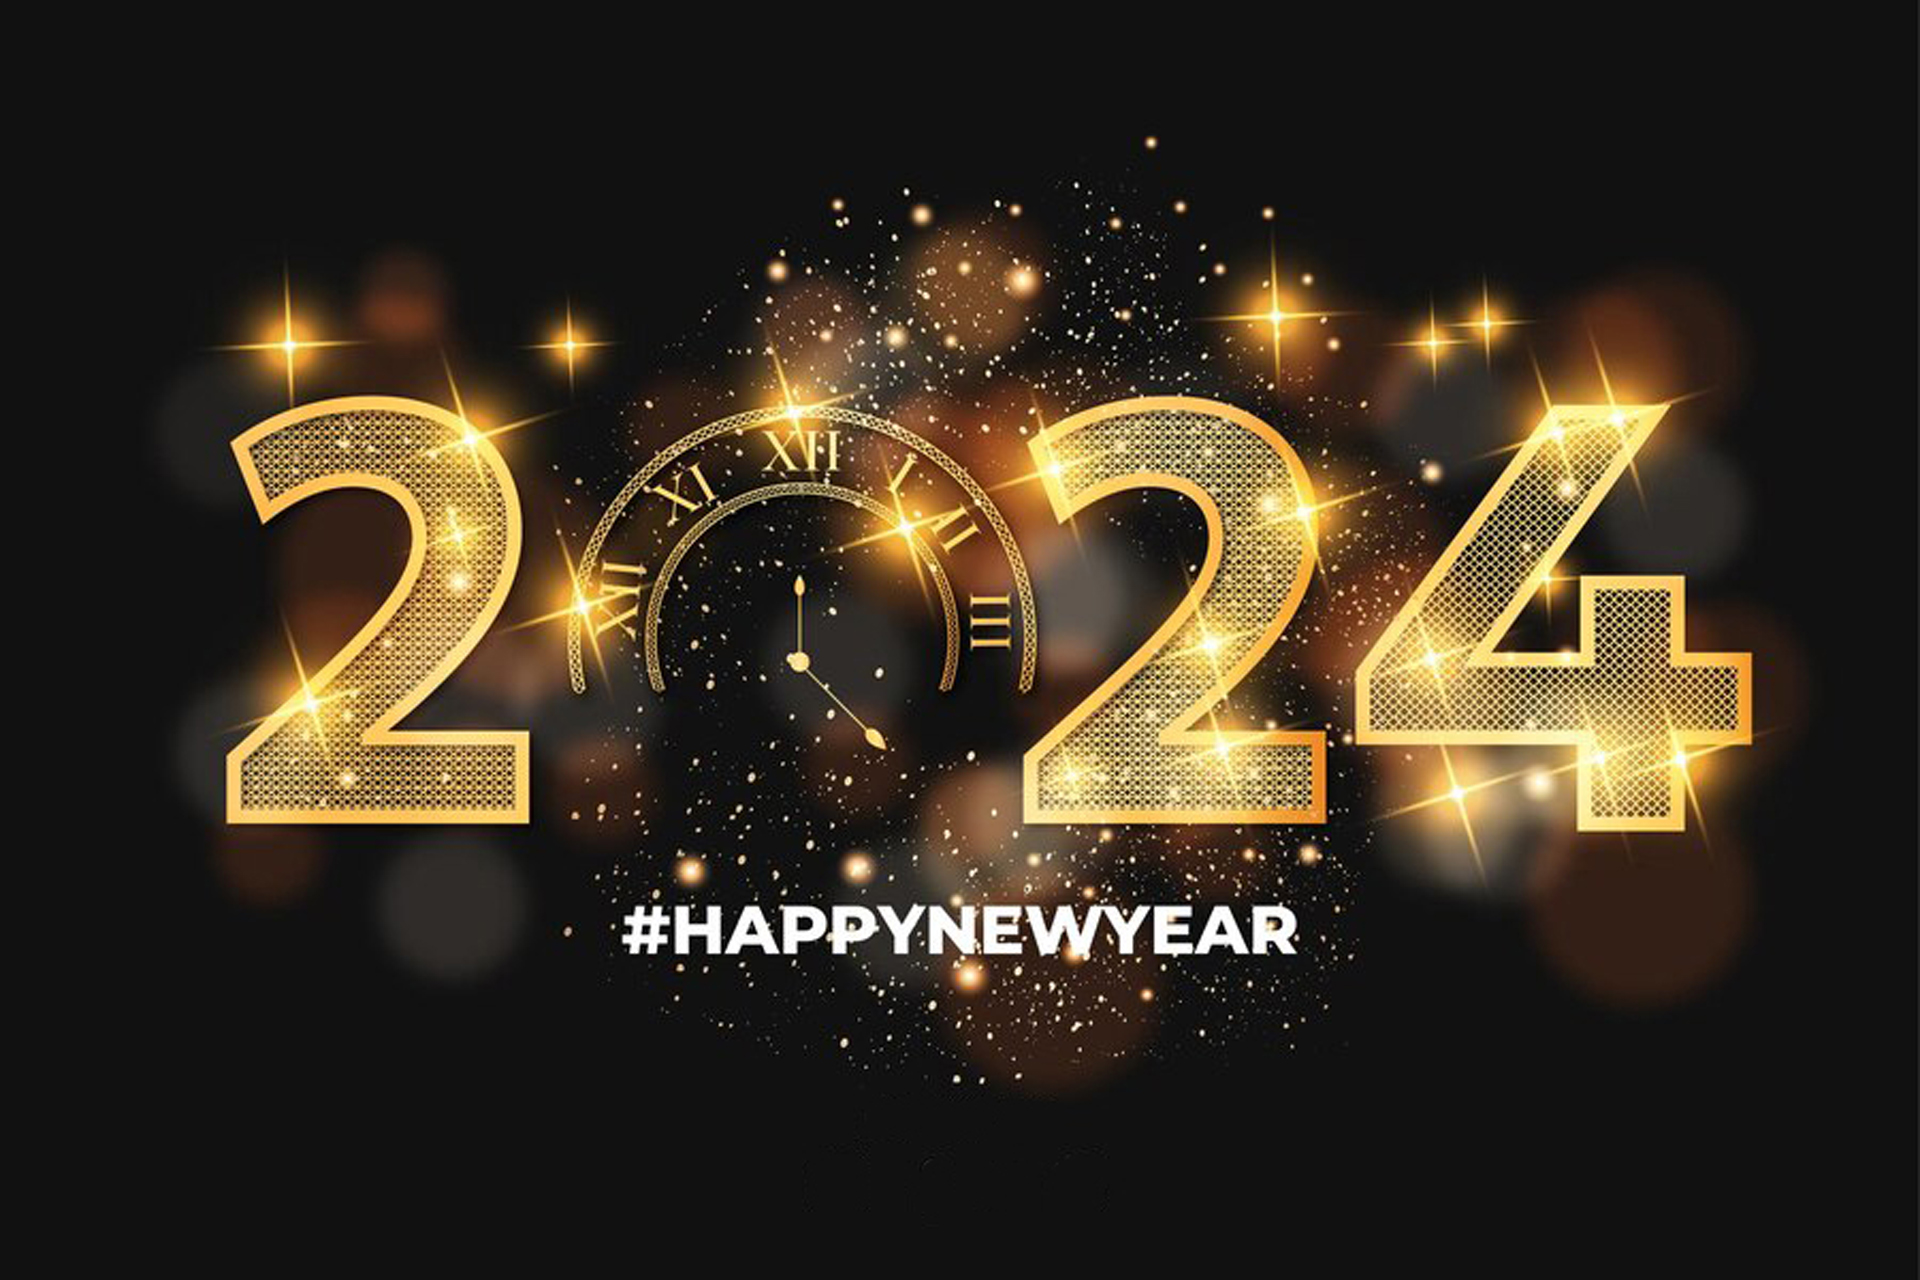 happy-new-year-2024.jpg